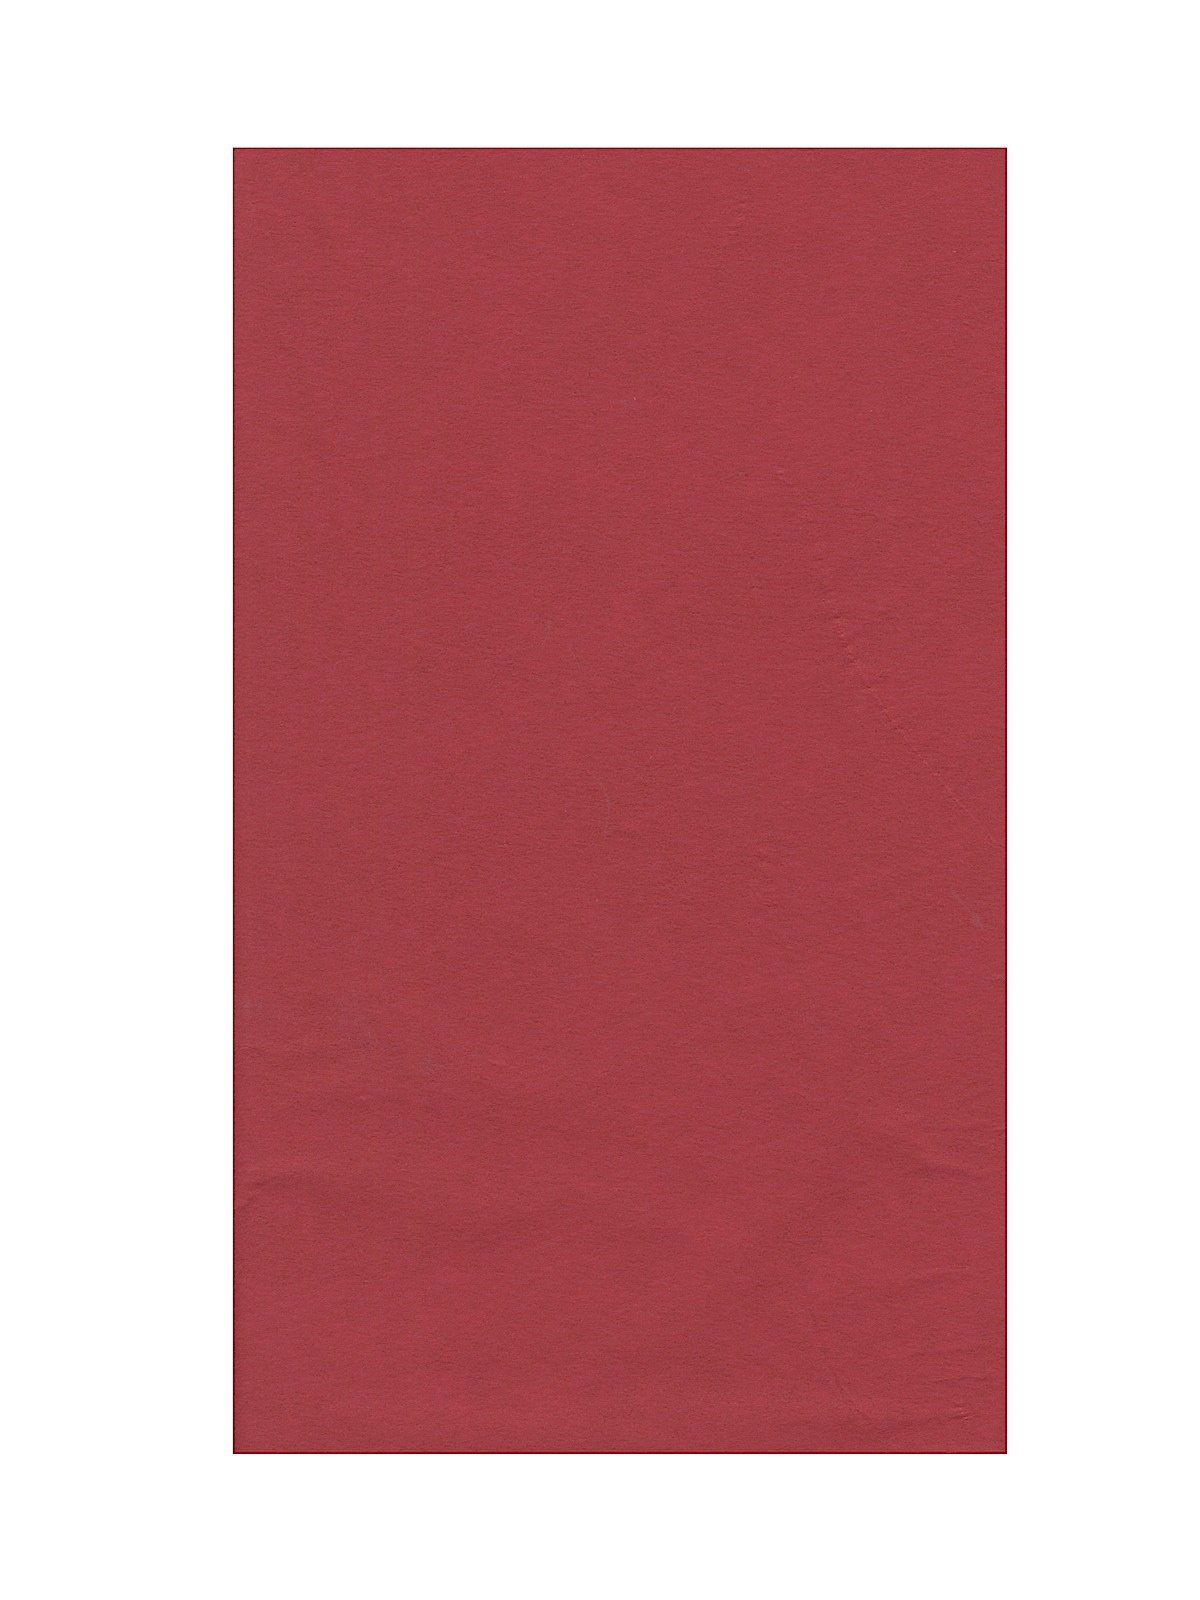 Spectra Deluxe Bleeding Art Tissue National Red 20 In. X 30 In. Pack Of 24